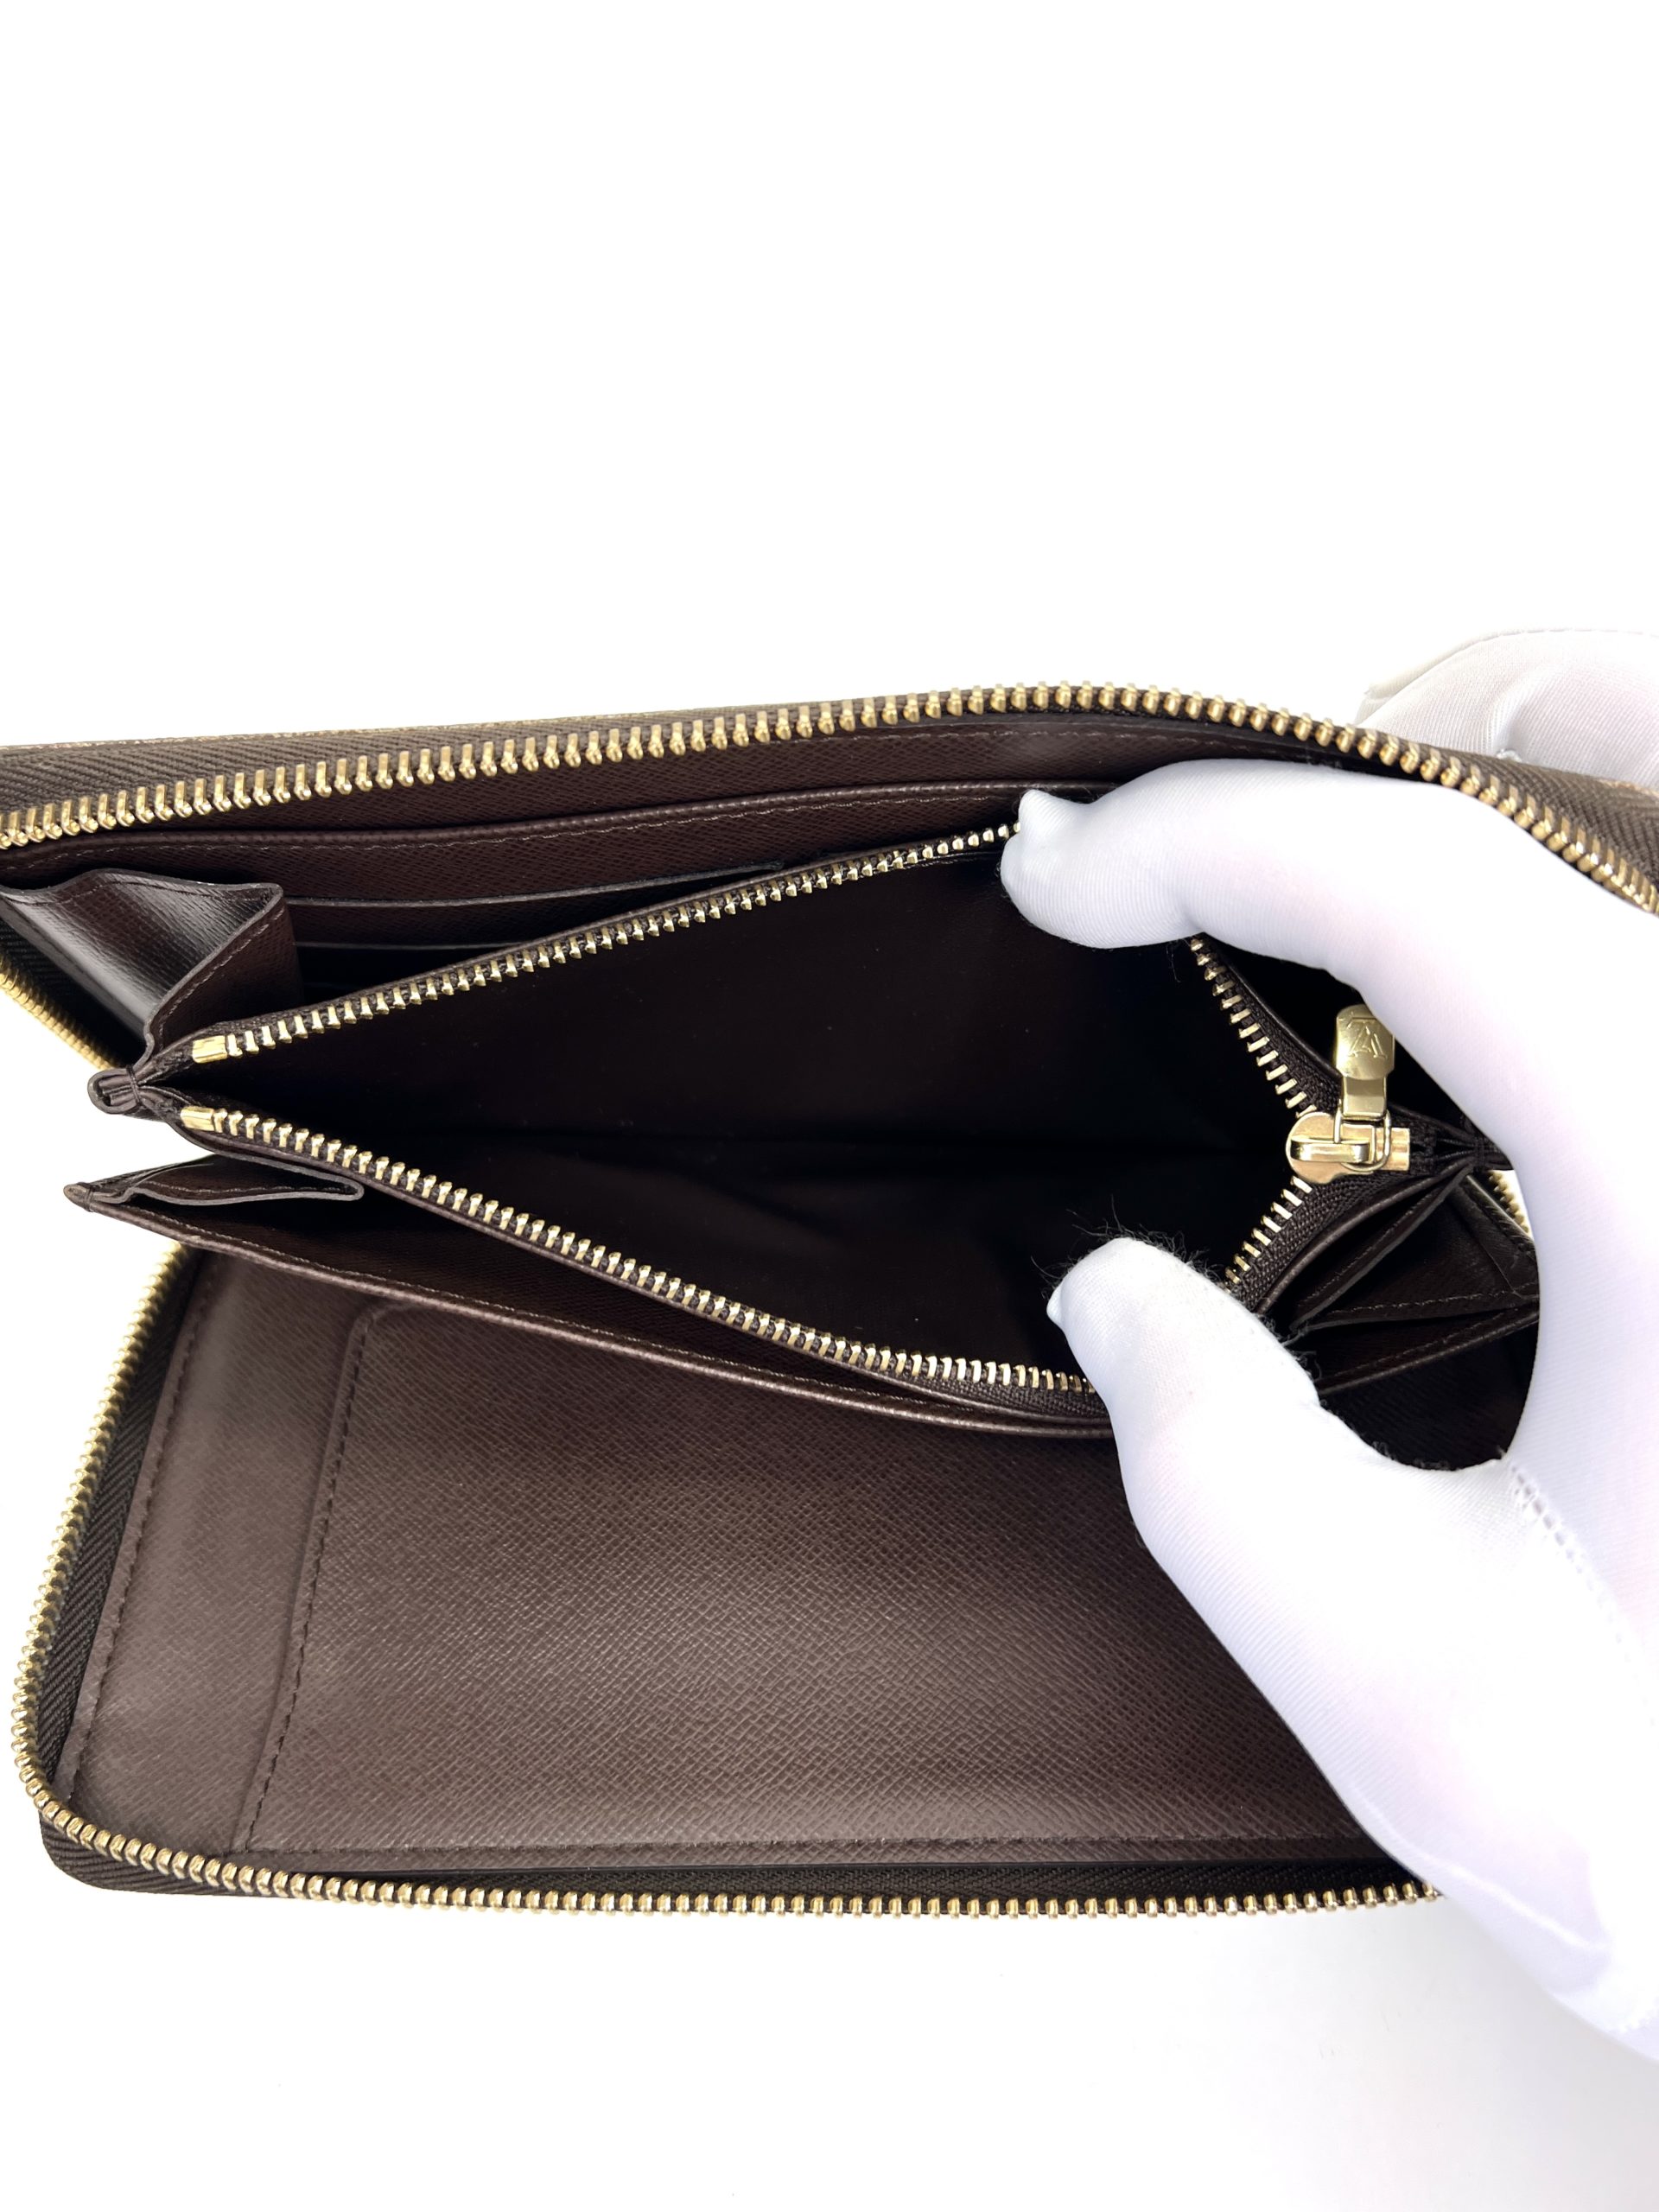 Louis Vuitton Billfold Wallet 6 Credit Card Slots Damier Ebene